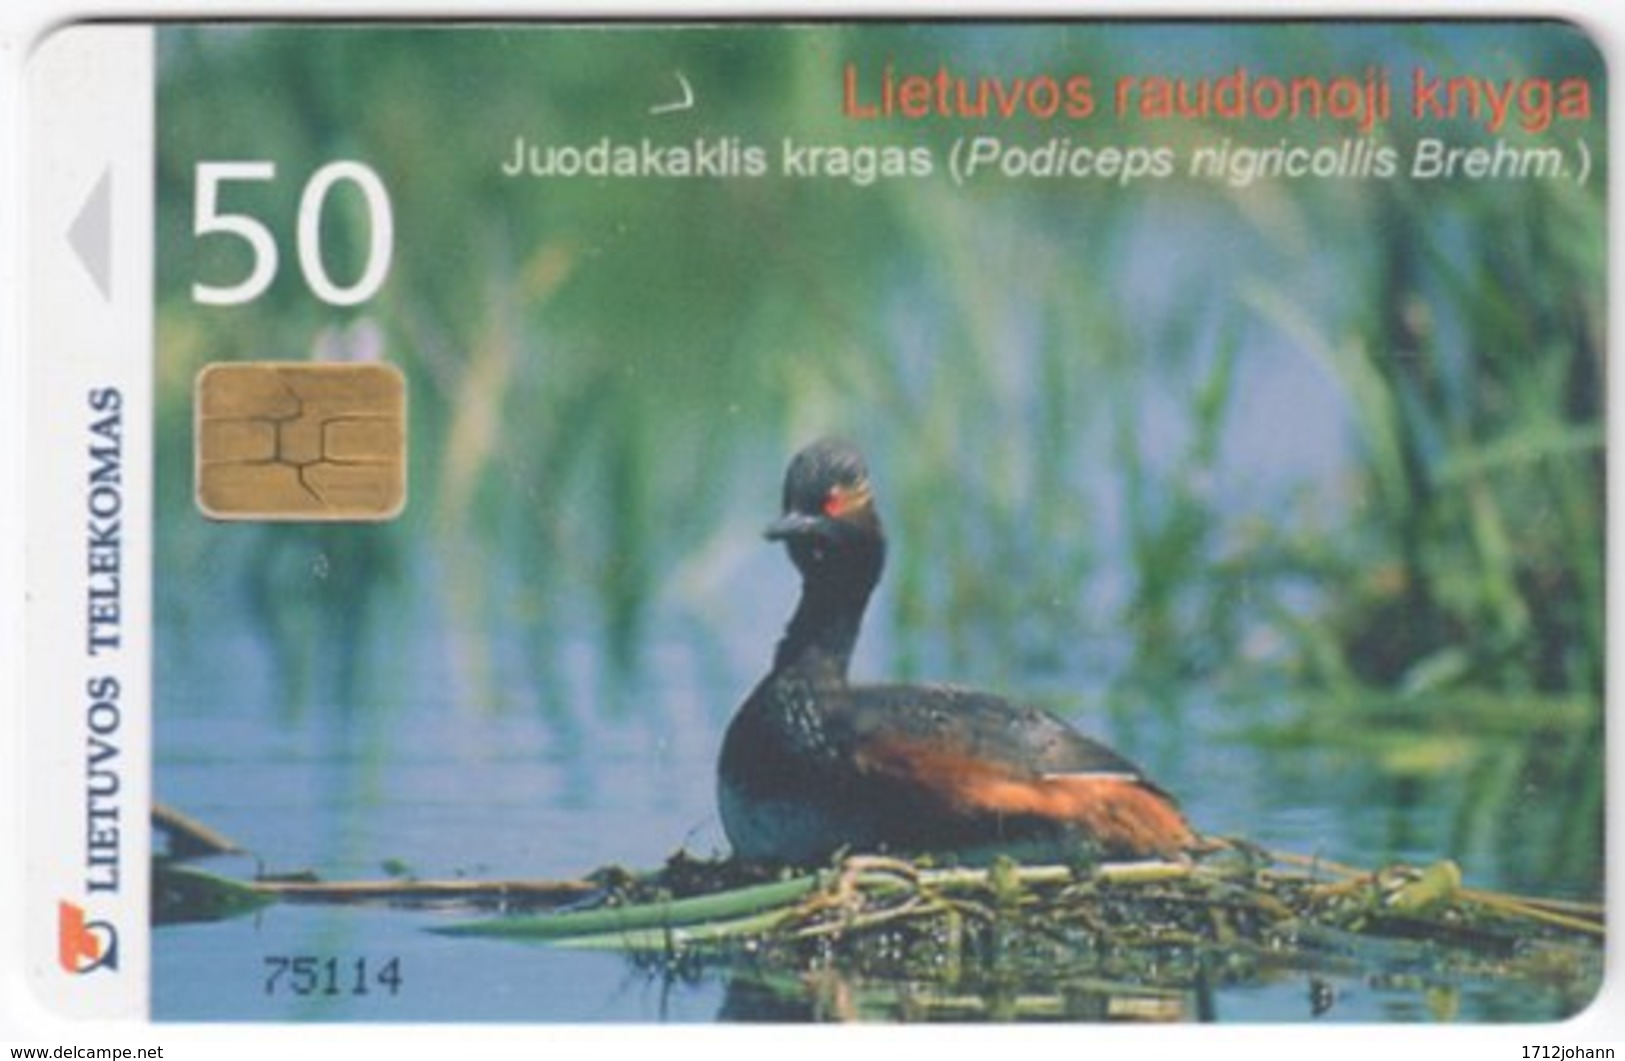 LITUHANIA A-447 Chip Telekomas - Animal, Bird - Used - Lithuania